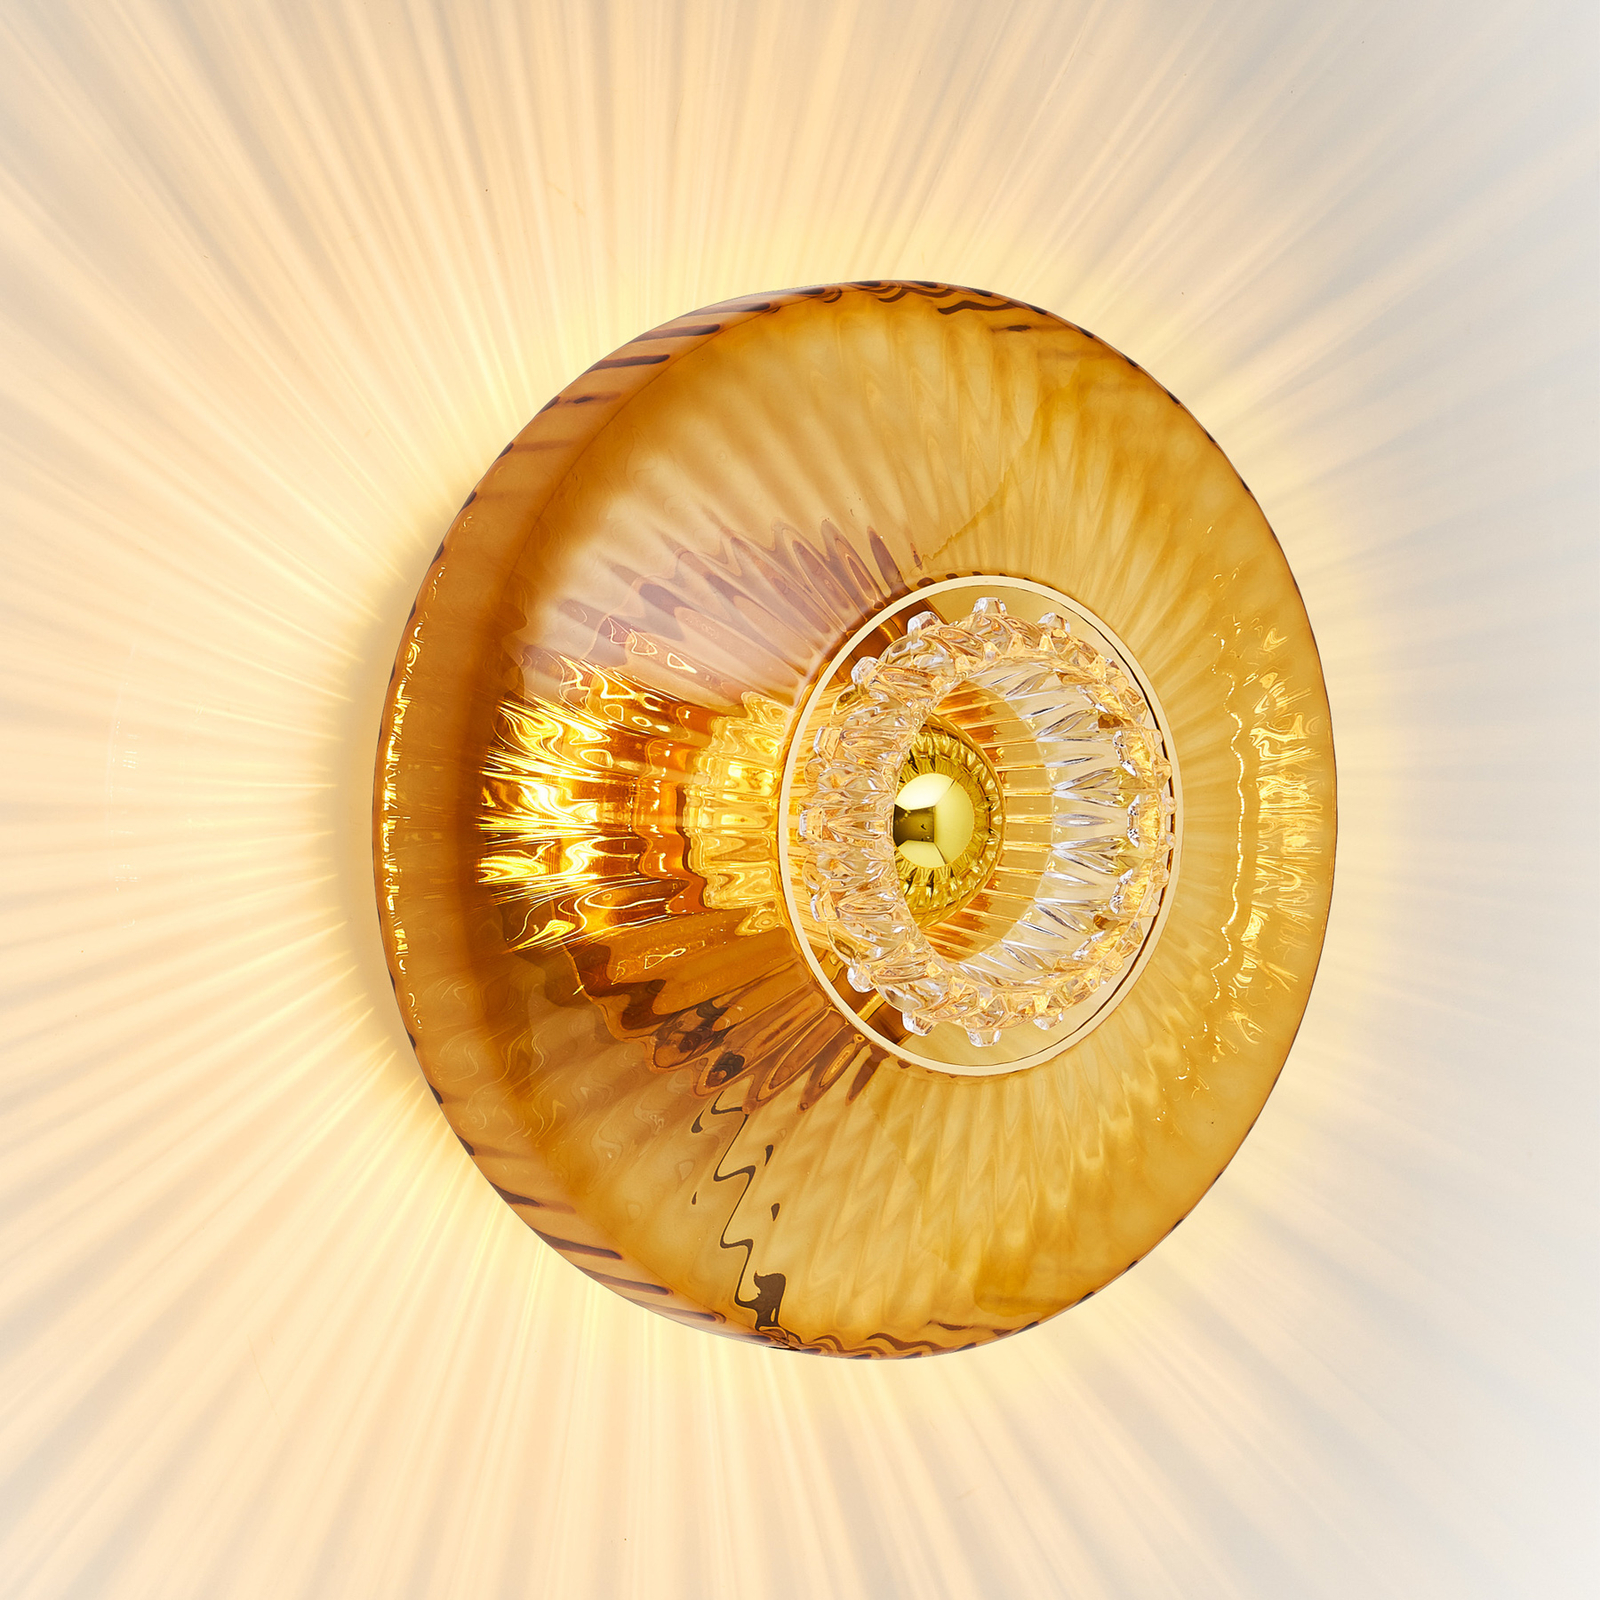 Wandlamp New Wave Optic XL, amber, Eyeball, stekker